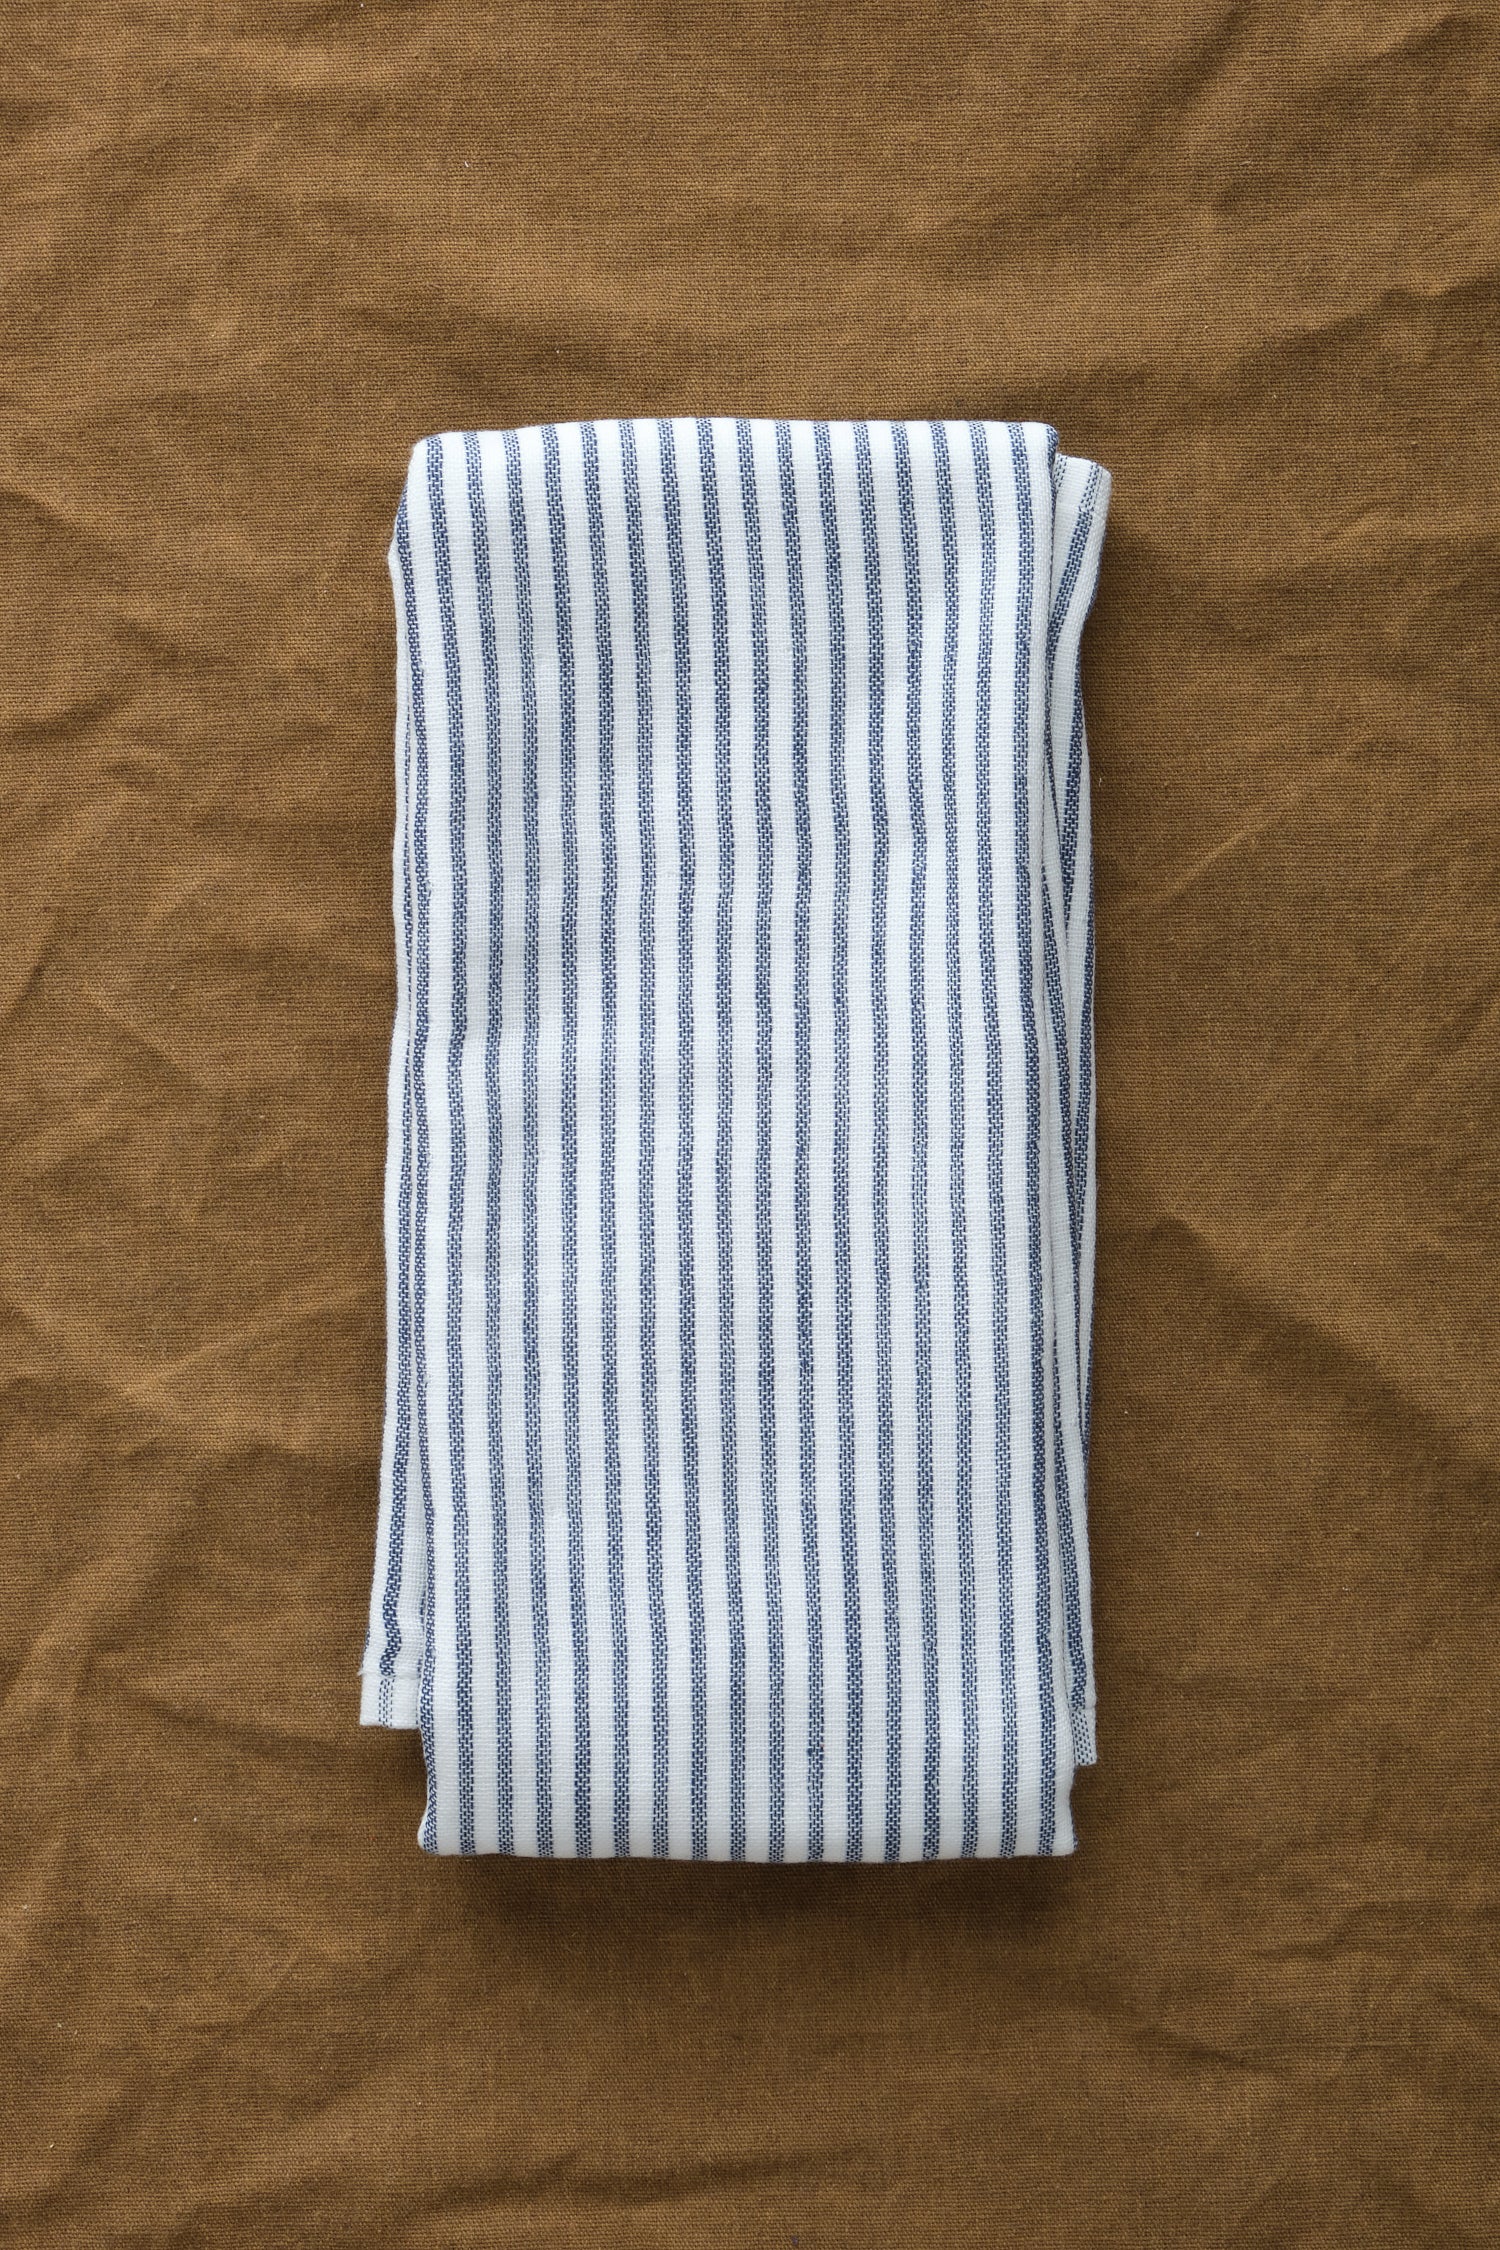 Shirt Stripe Hand Towel